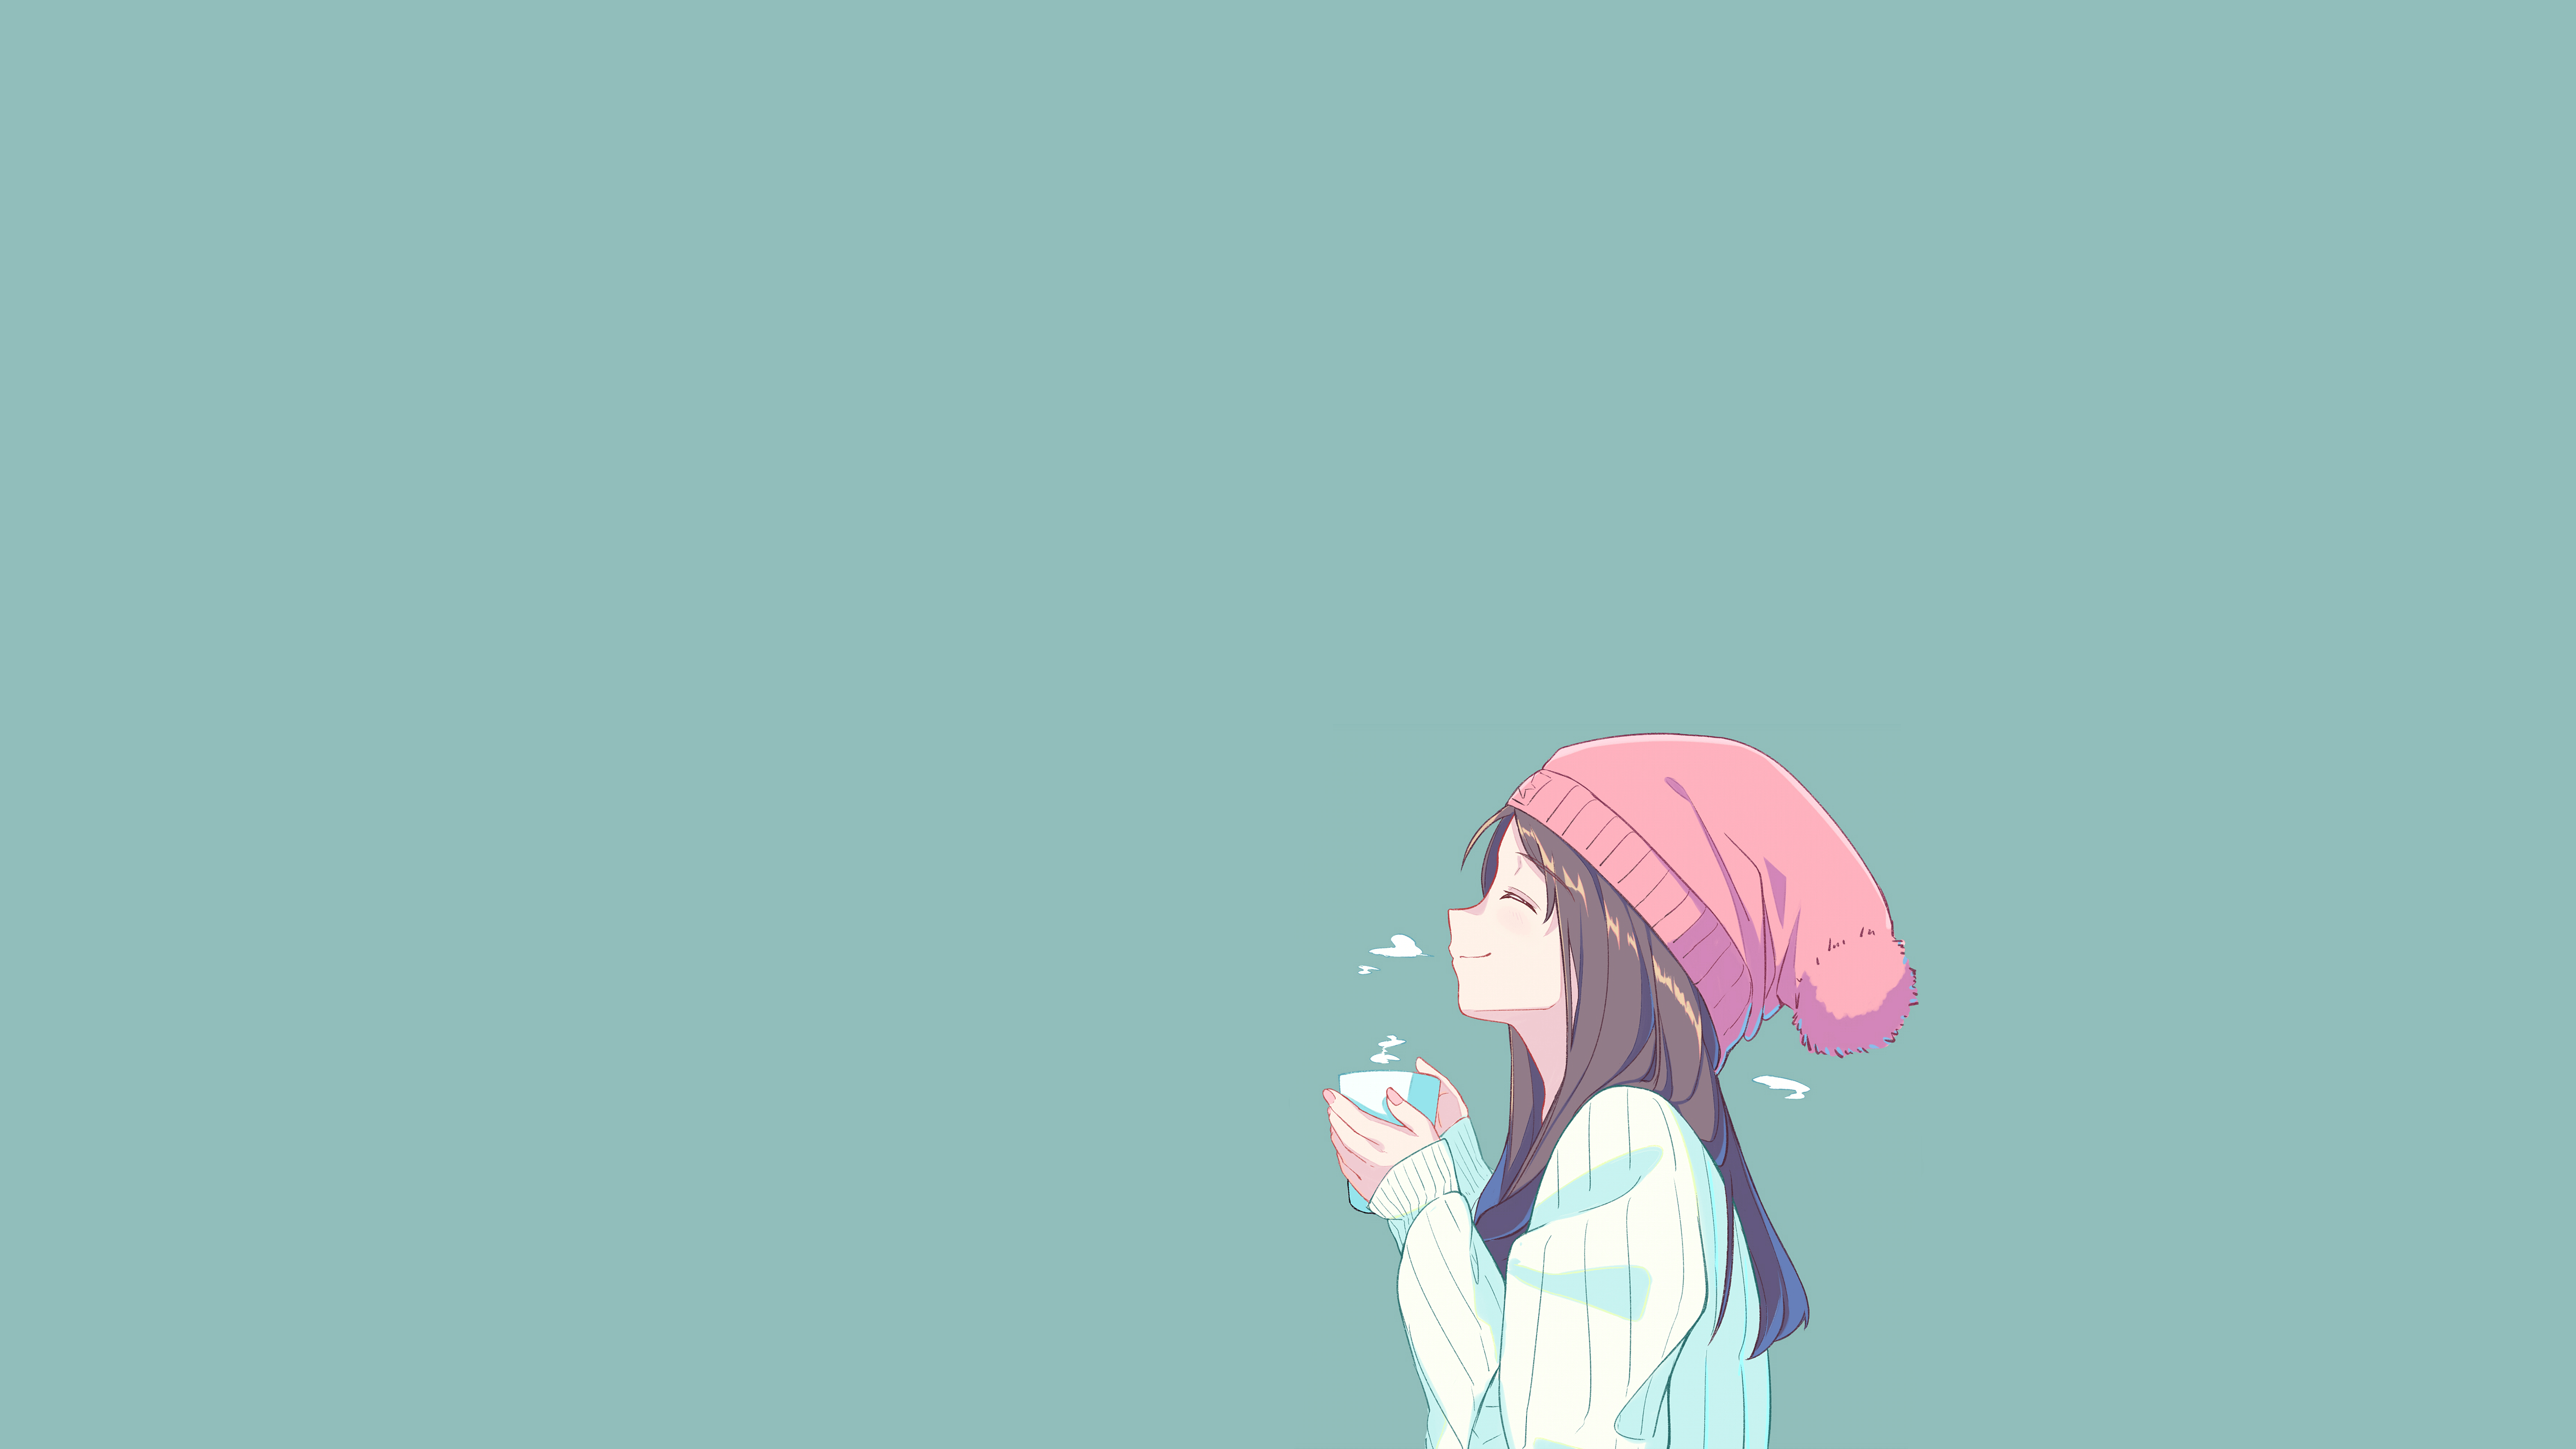 Aesthetic Anime Girl With Coffee